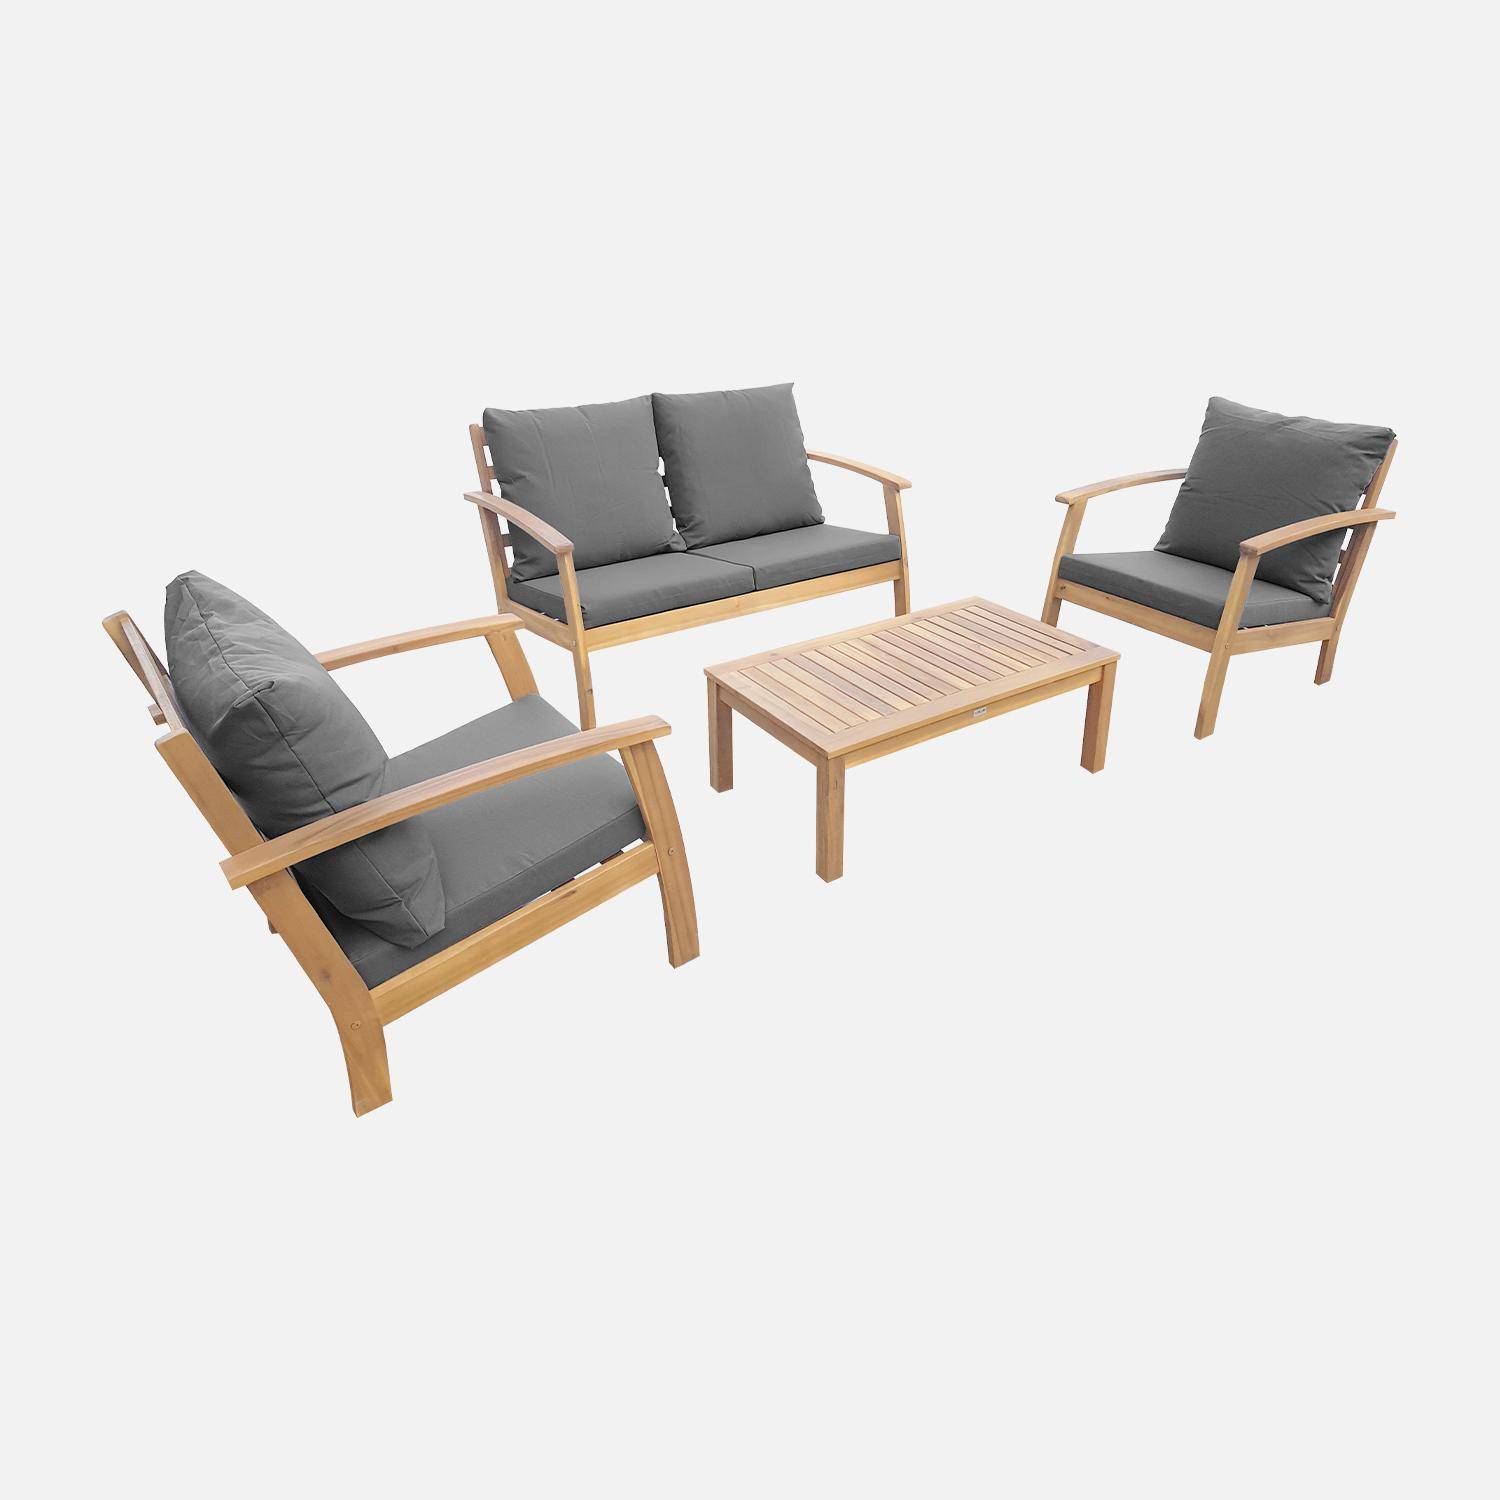 4-seater wooden garden sofa - Acacia wood sofa, armchairs and coffee table, designer piece  - Ushuaia - Grey,sweeek,Photo2